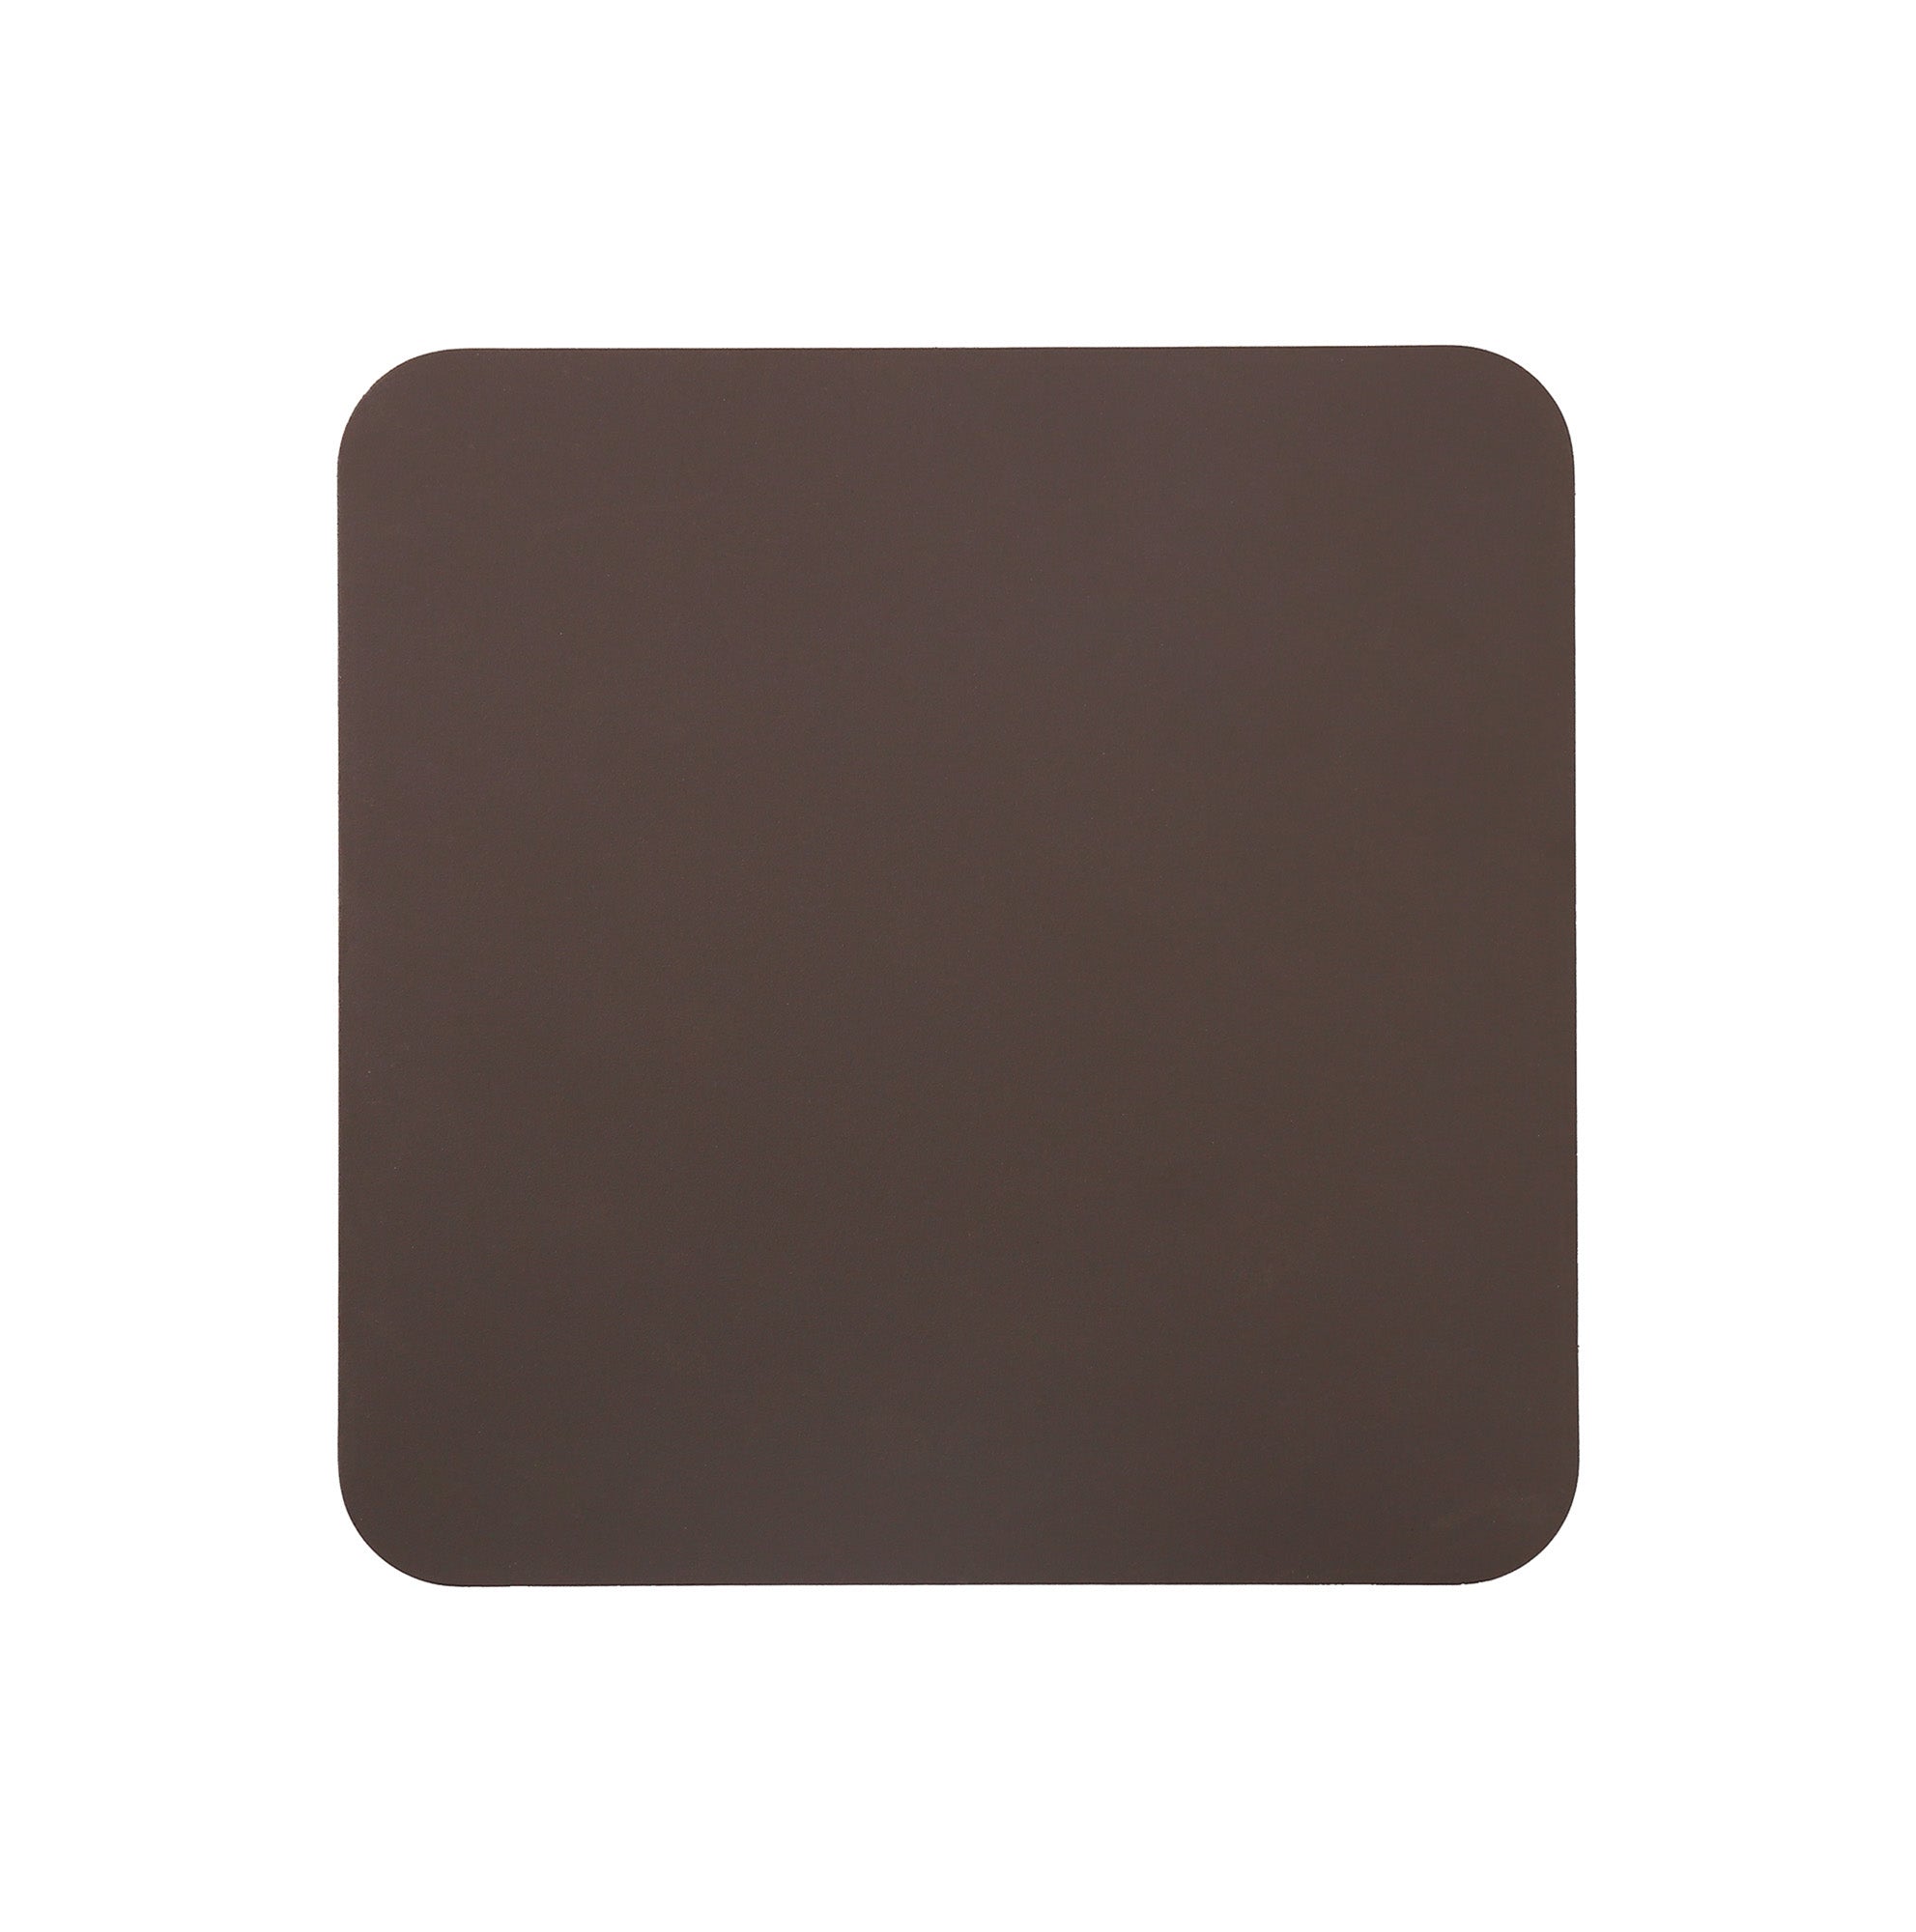 Modus 200mm Non-Electric Square Plate, Coffee